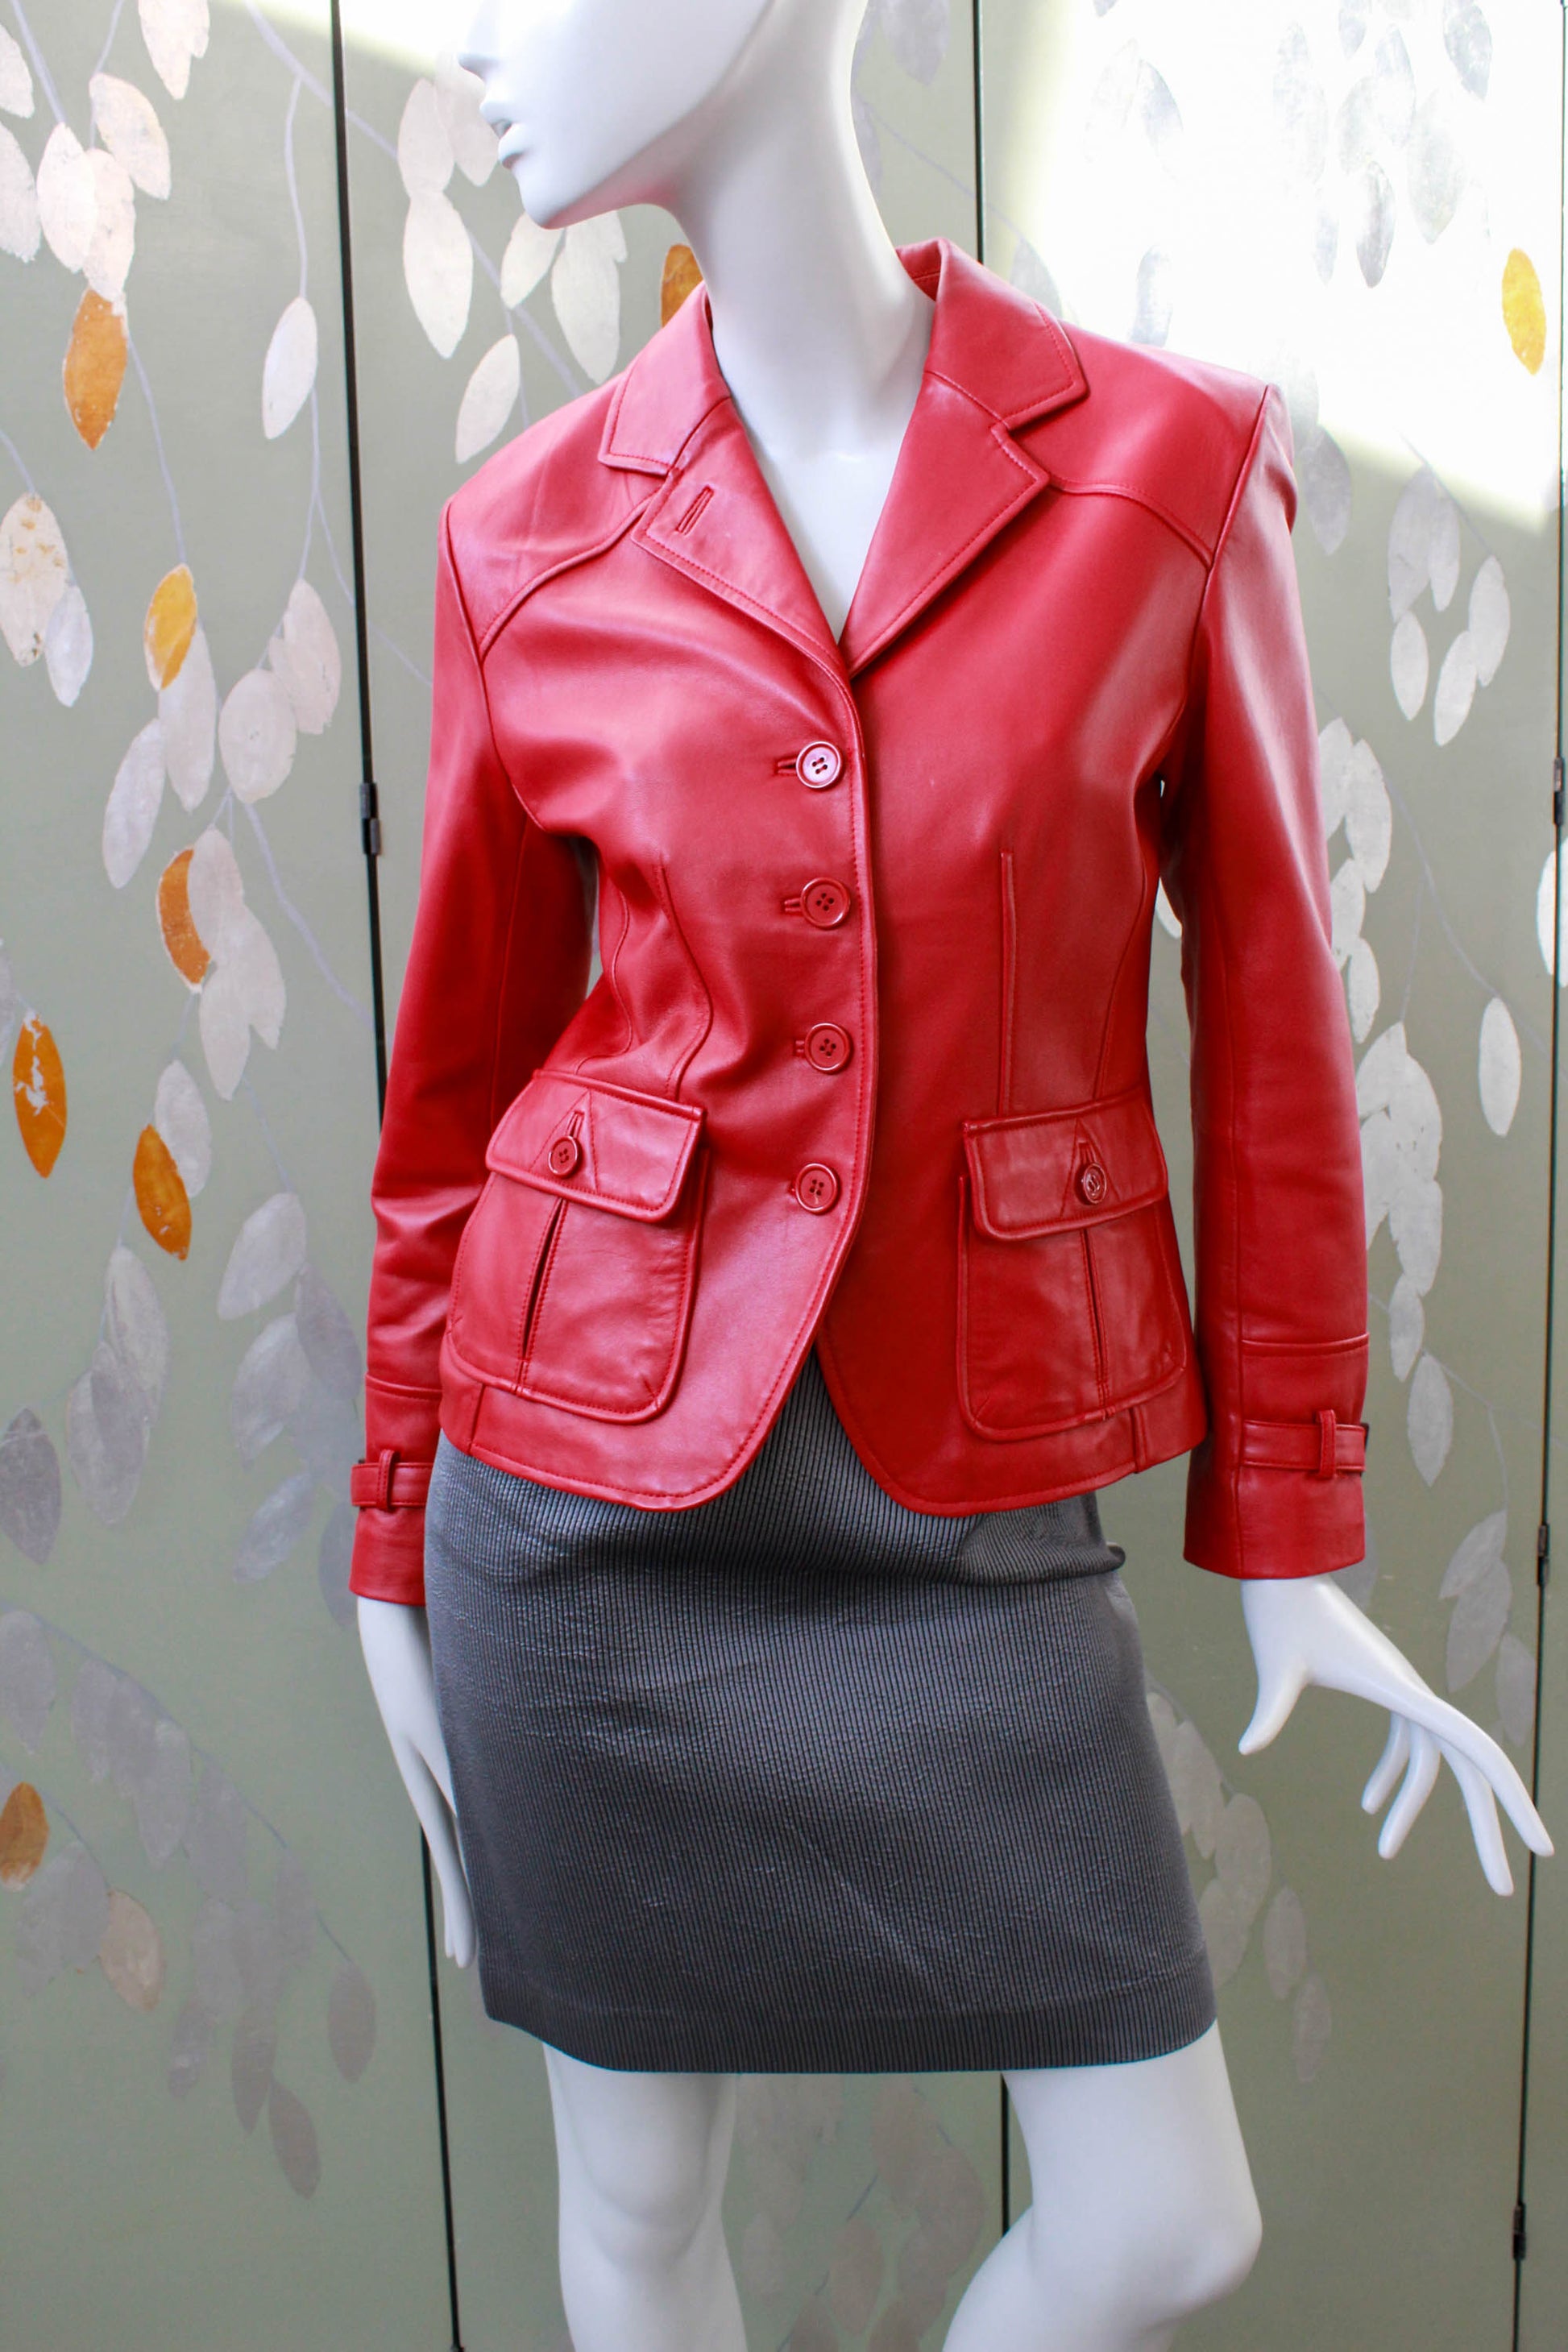 Vintage red leather jacket  Red leather jacket outfit, Red jacket outfit,  Fashion outfits